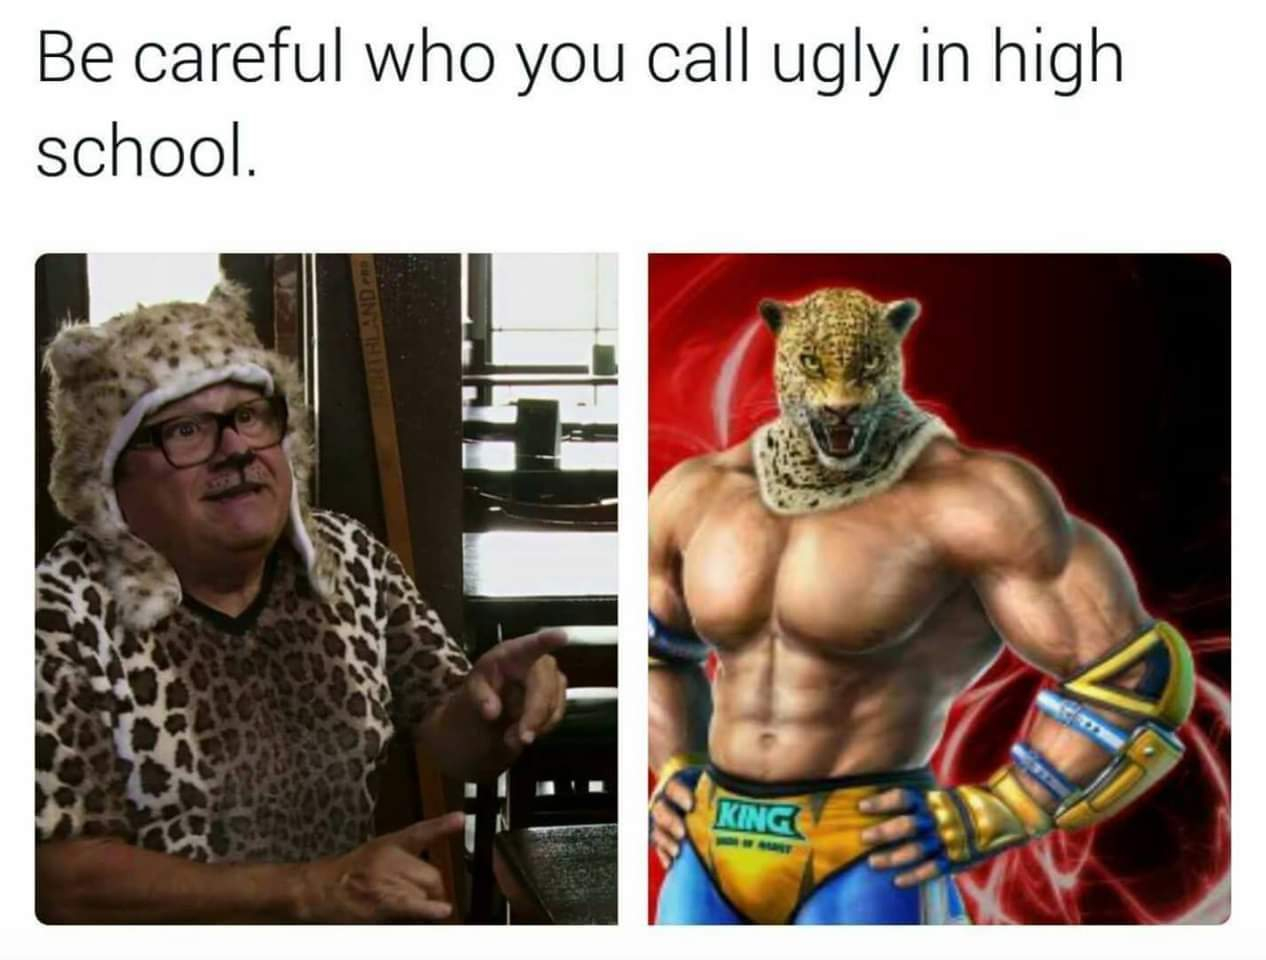 tekken 7 leopard - Be careful who you call ugly in high school. Bland King